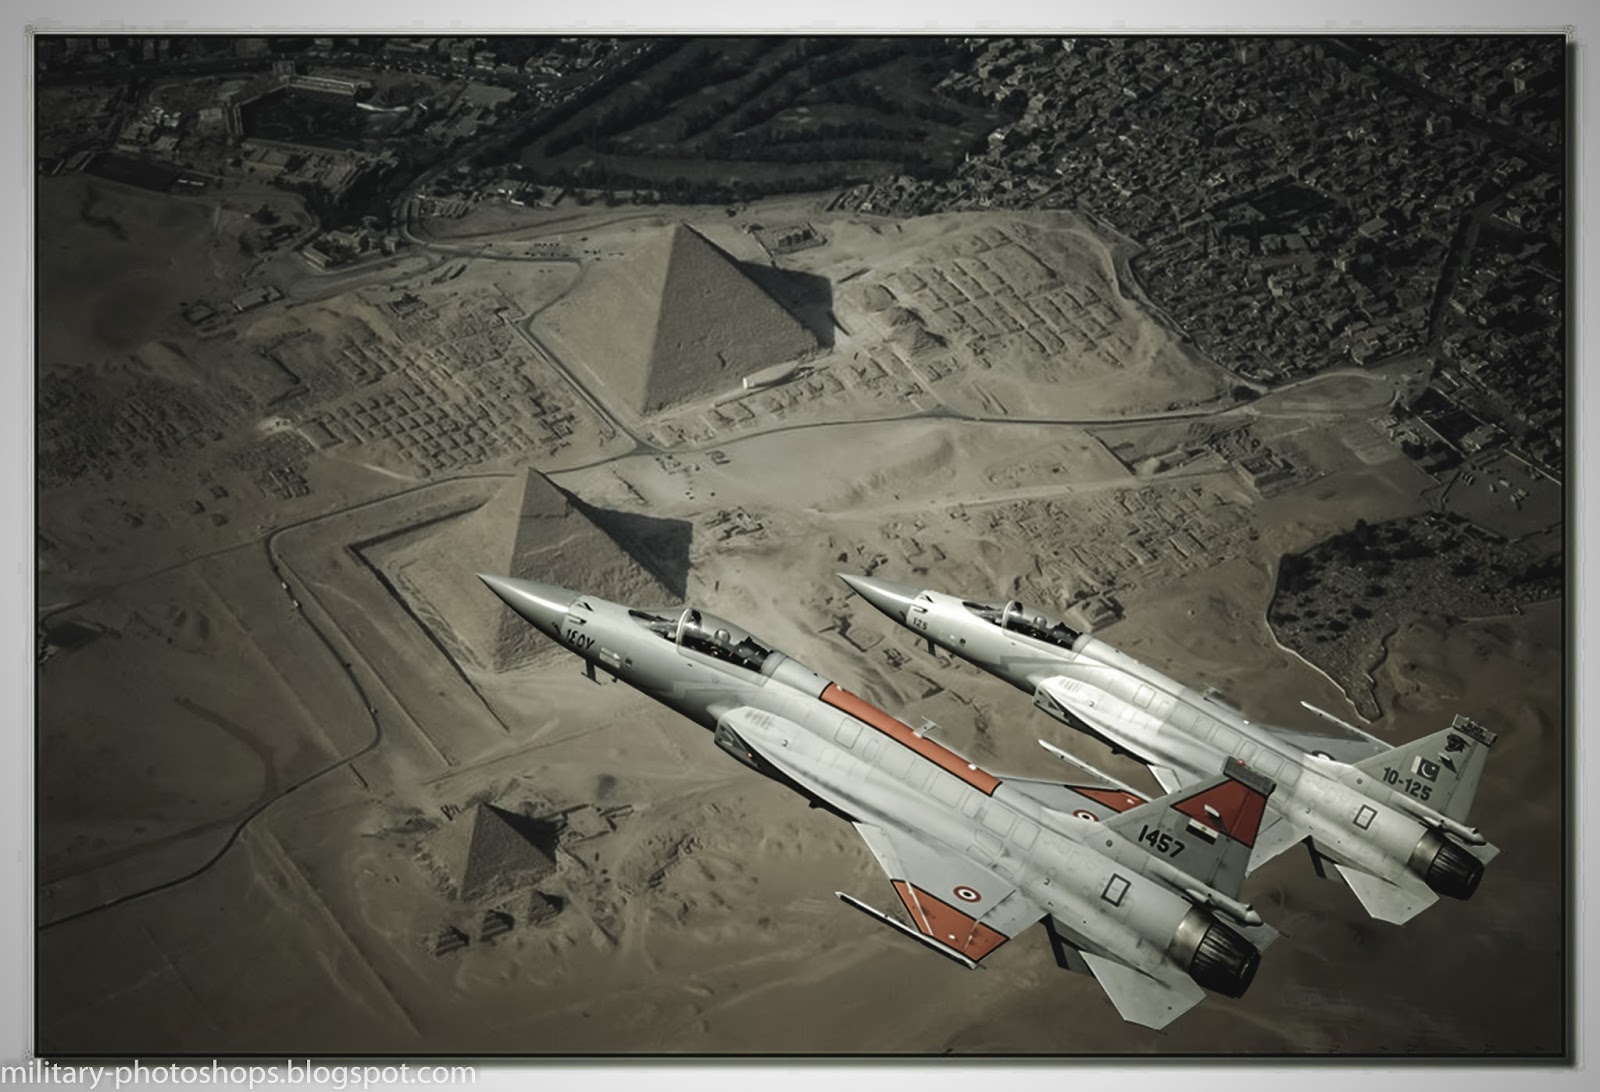 jf17+egypt+military+photoshops-1.jpg